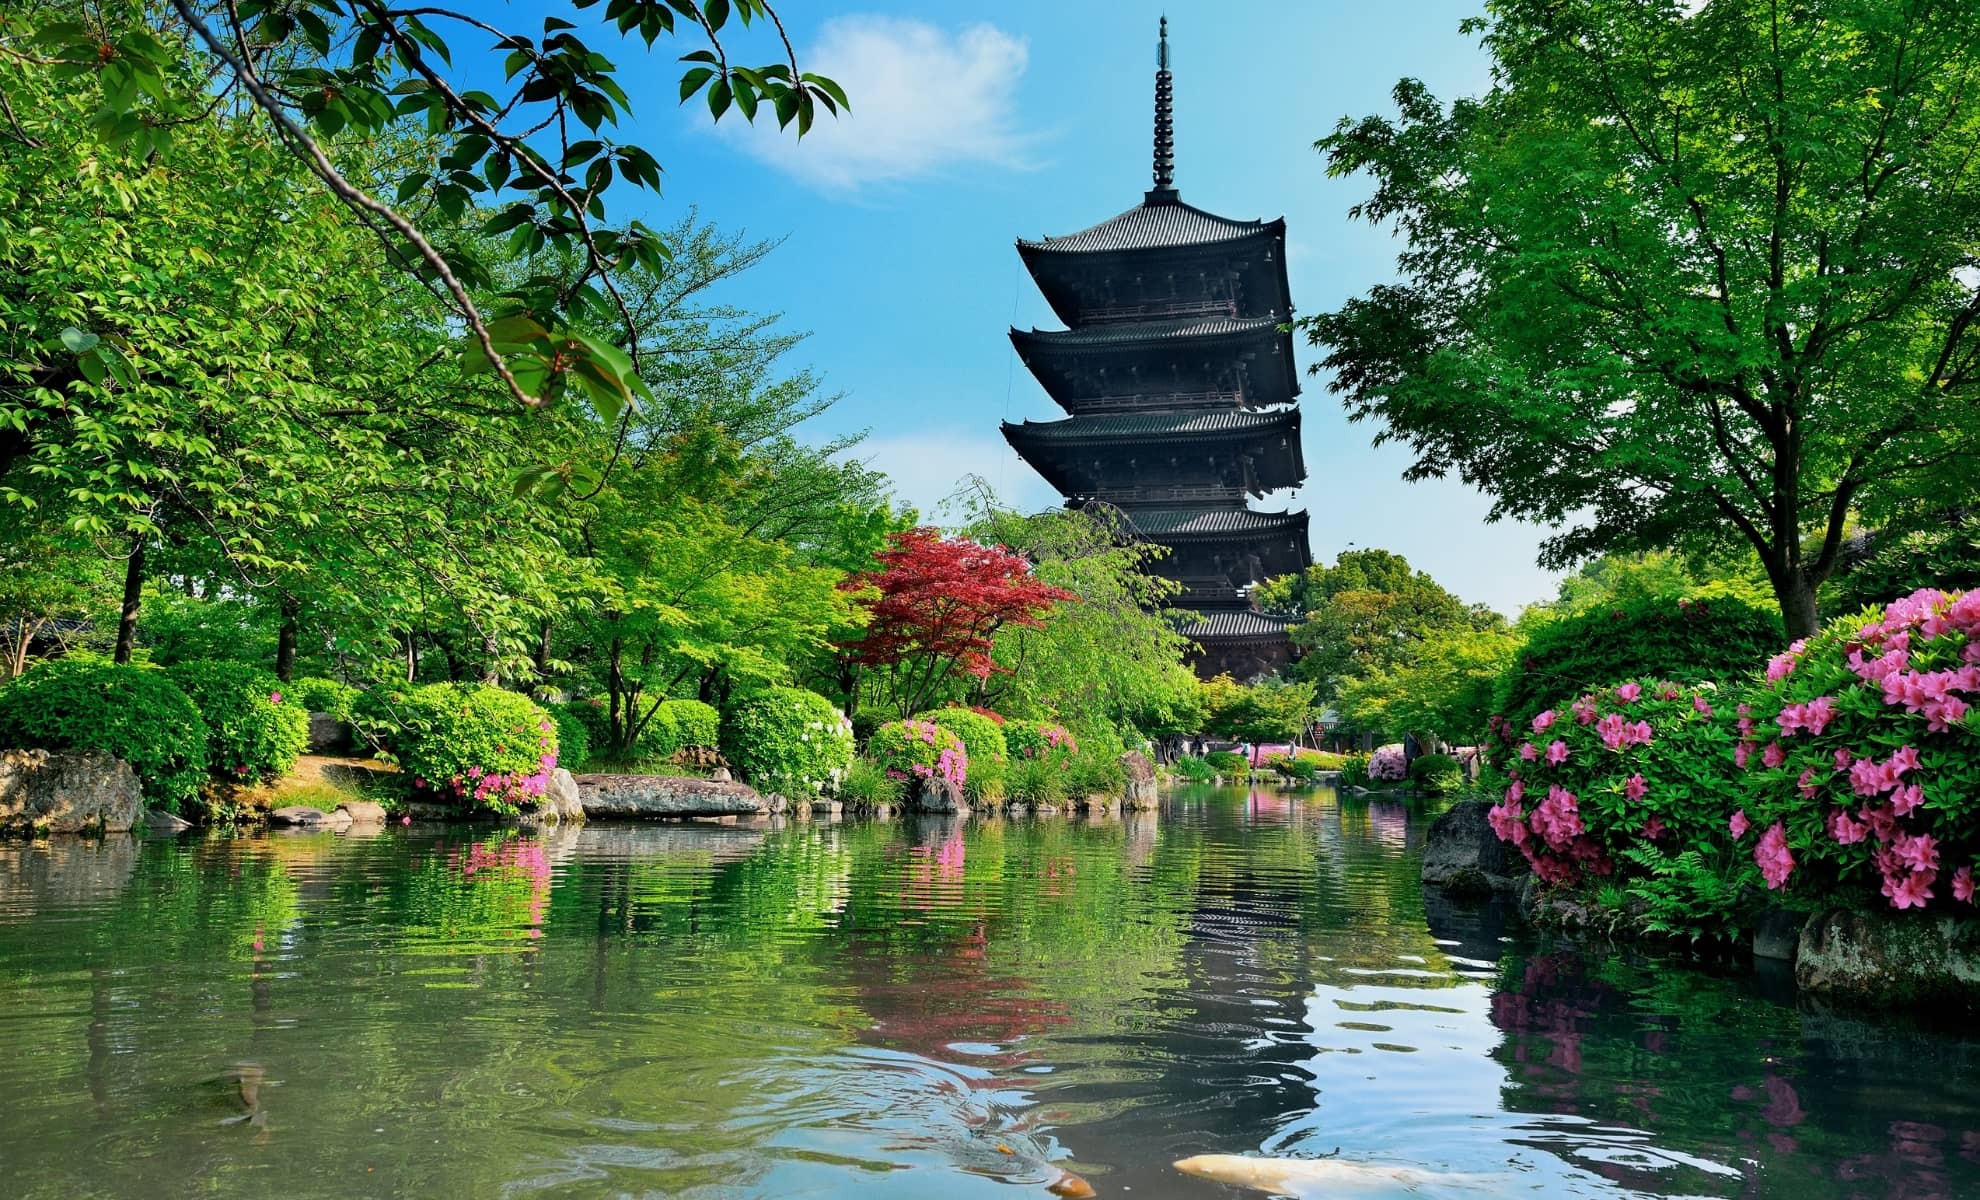 Le temple Toji et son jardin, Kyoto, Japan